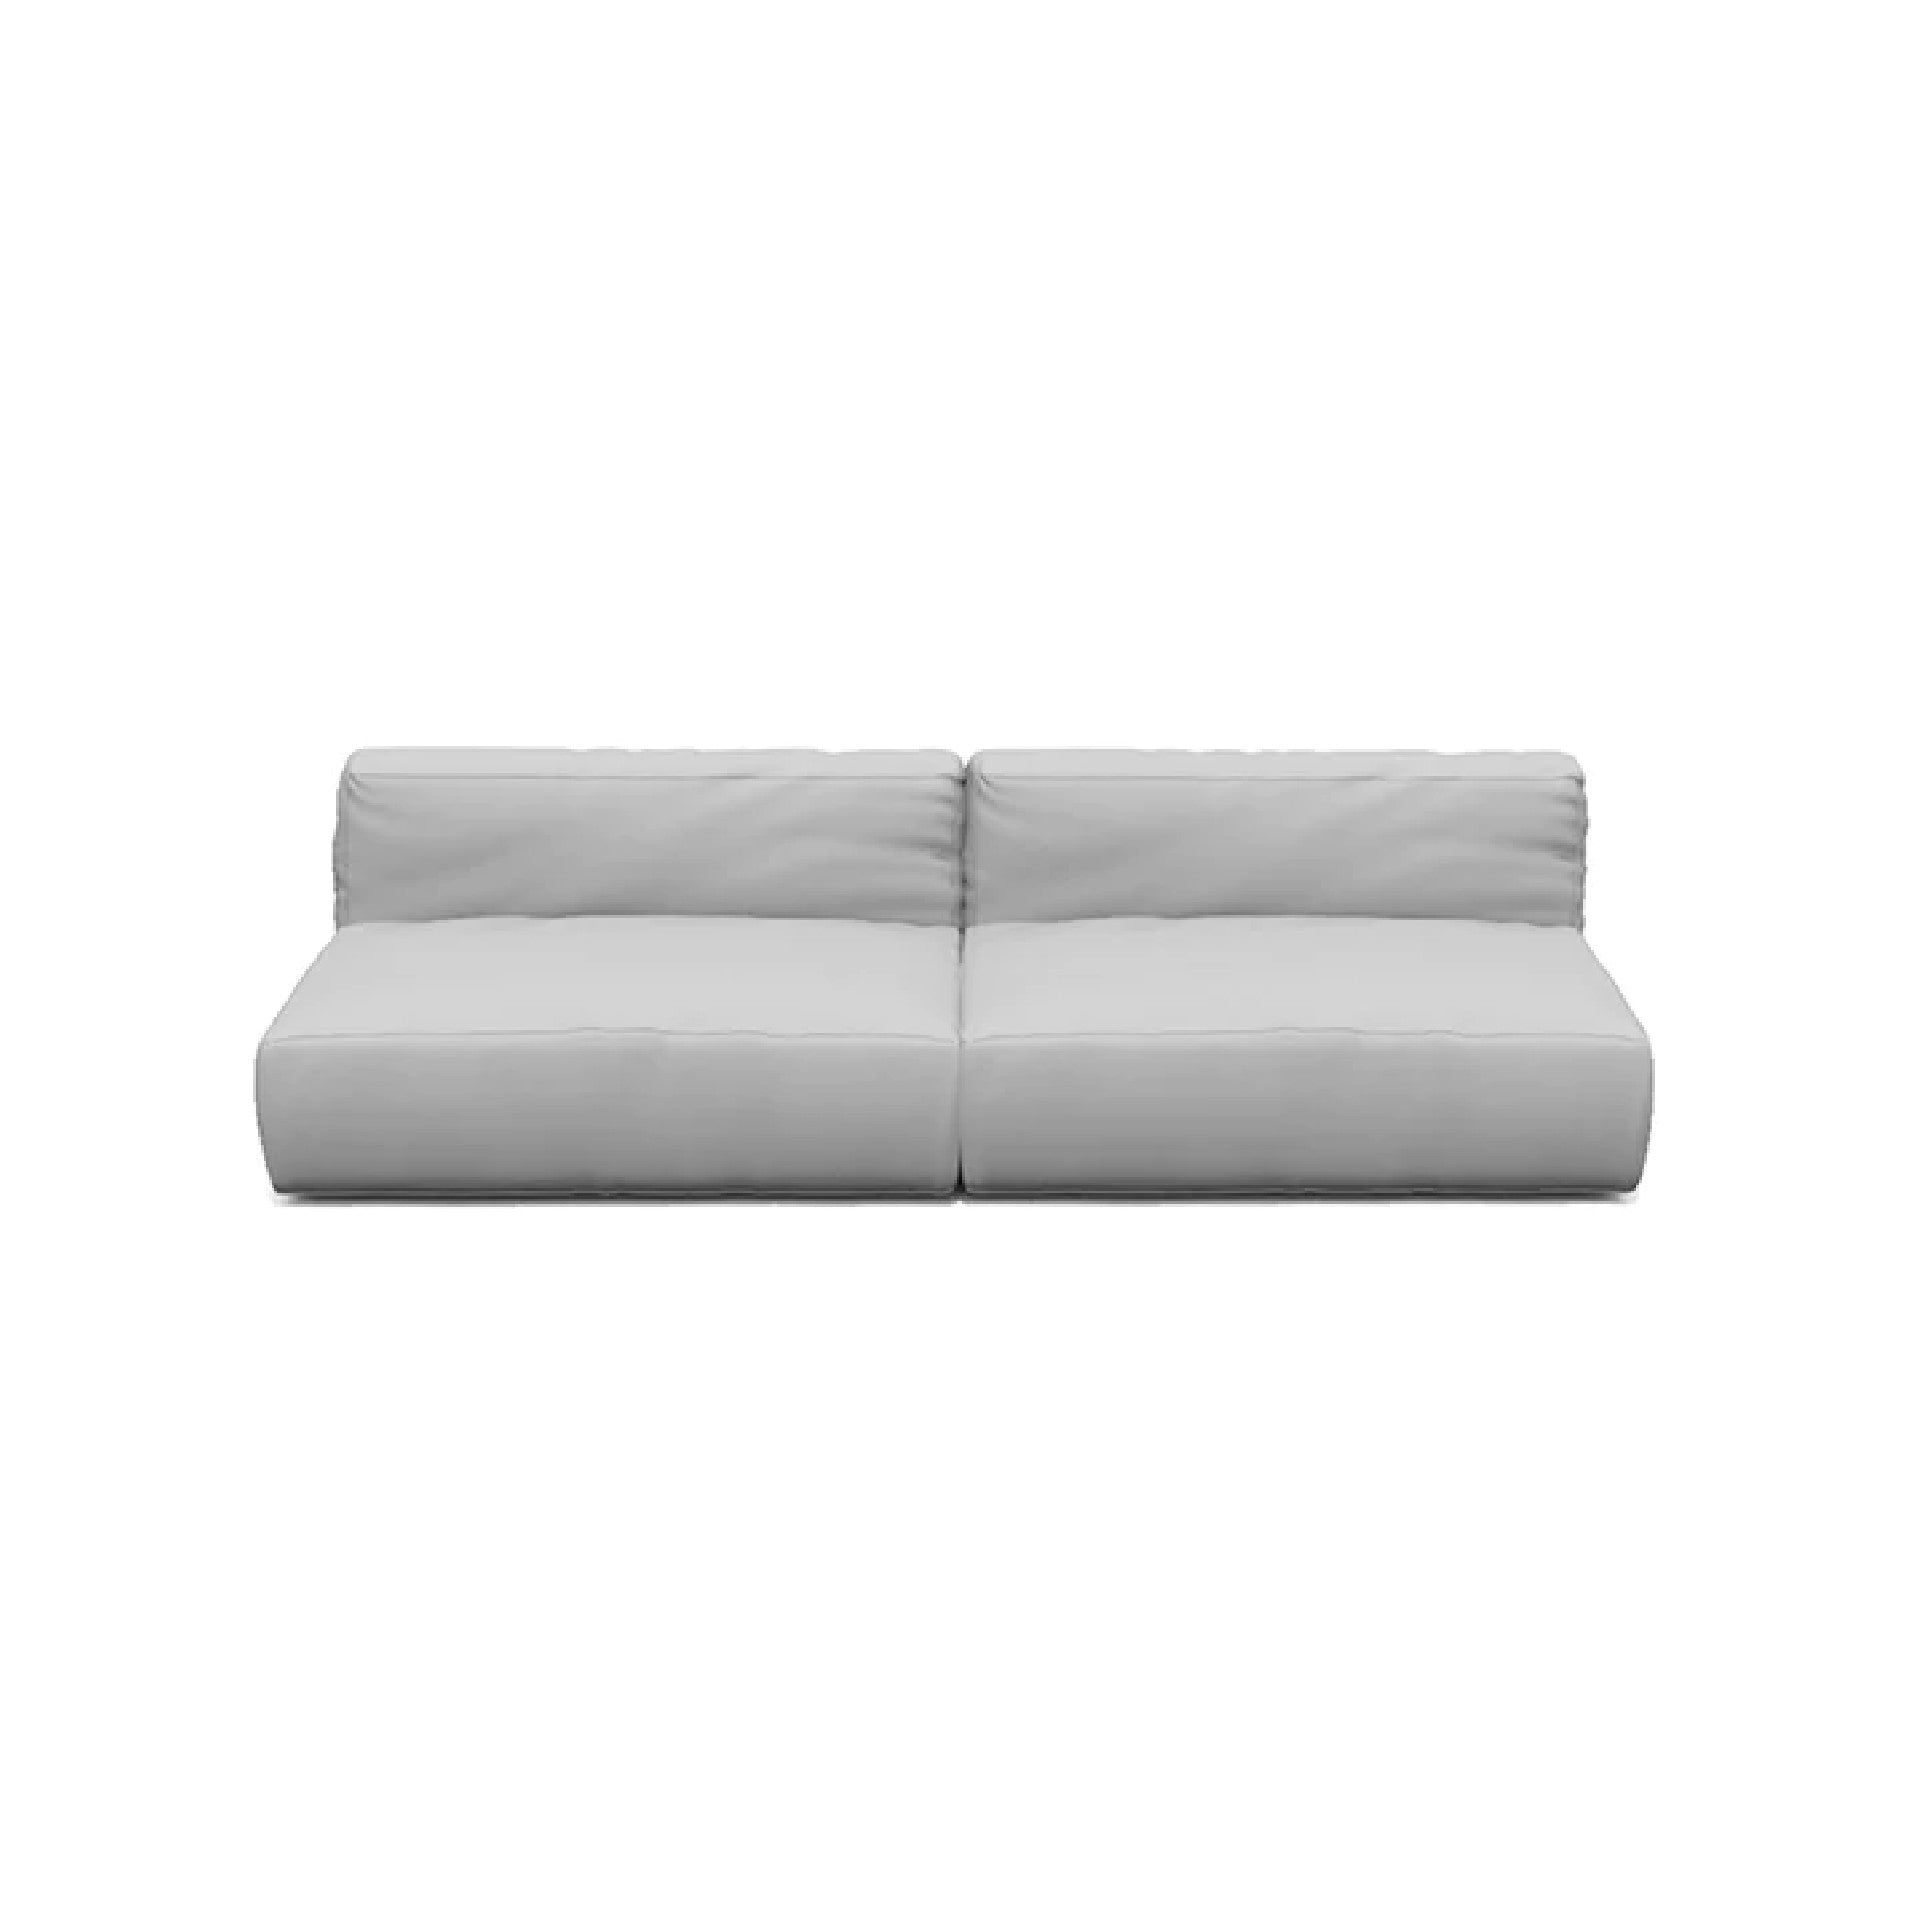 GROW Outdoor Patio Sectional Sofa Combination G